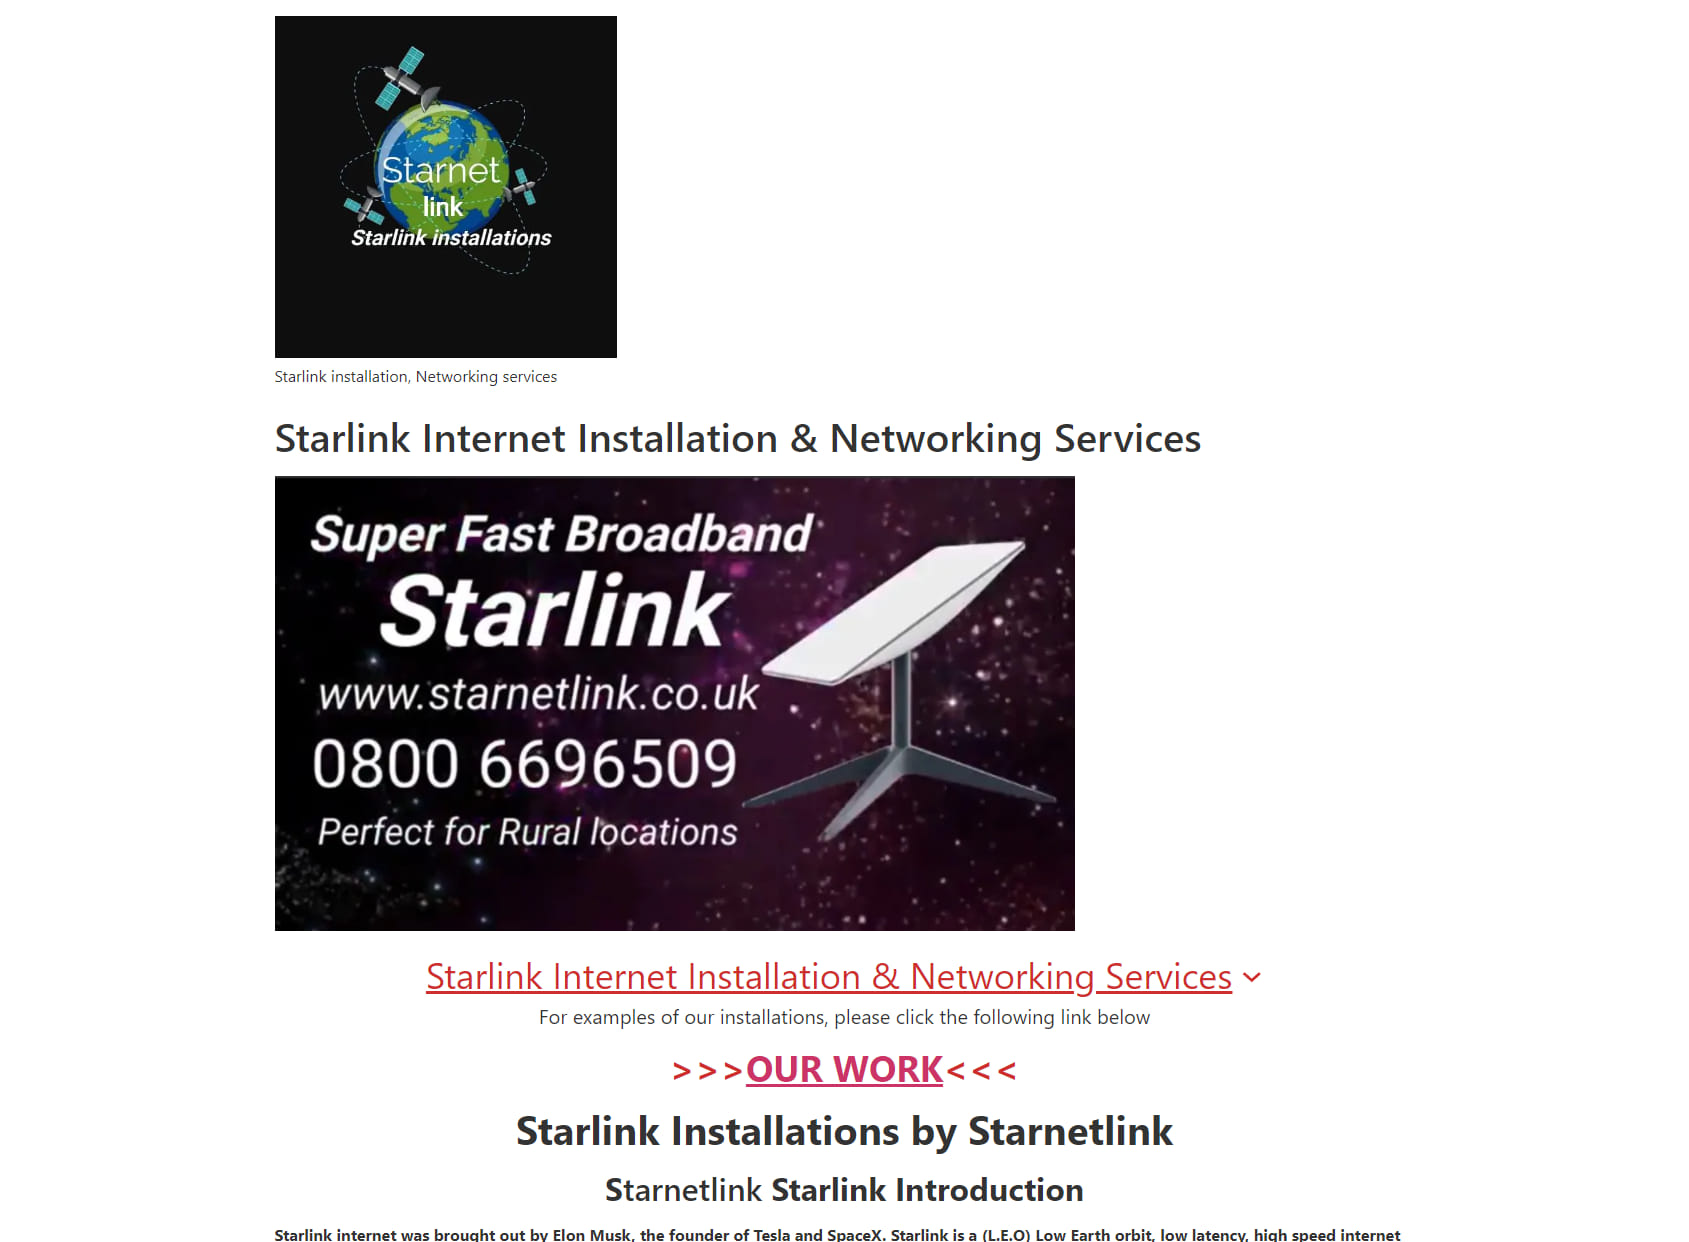 Starnetlink